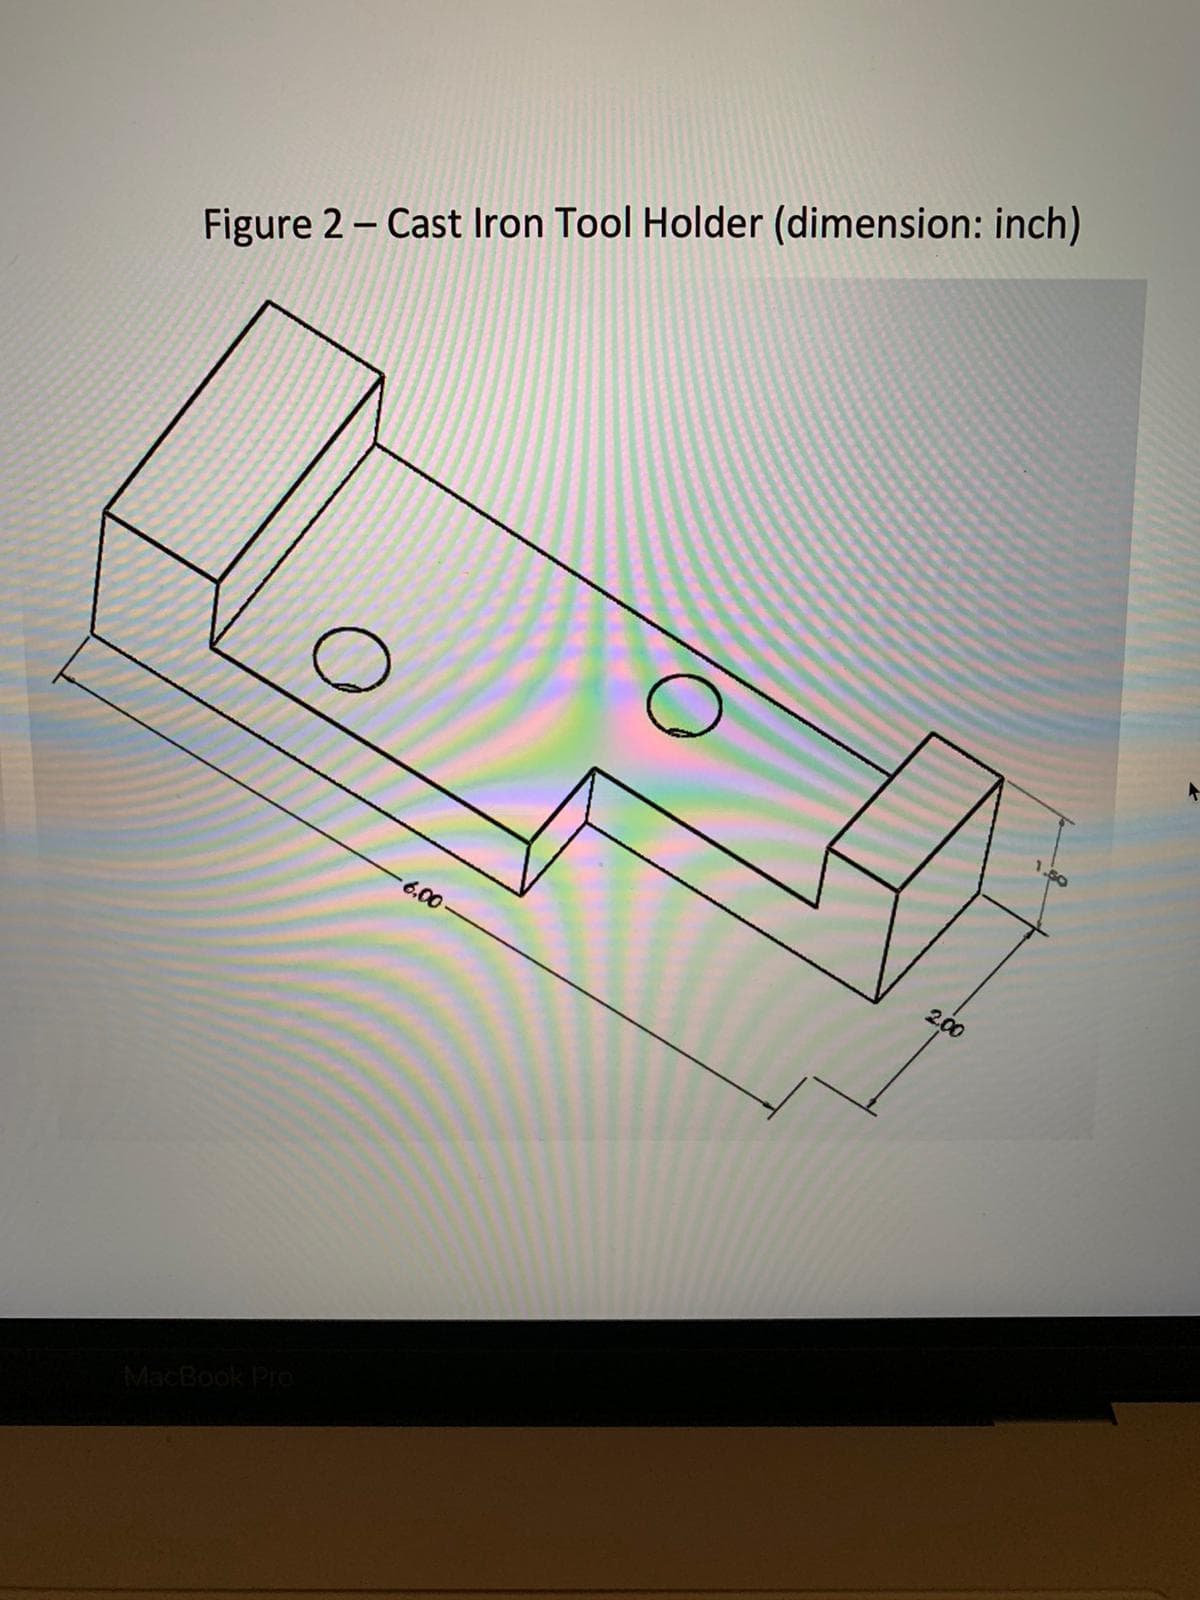 Figure 2 Cast Iron Tool Holder (dimension: inch)
2.00
6.00
MacBook Pro
